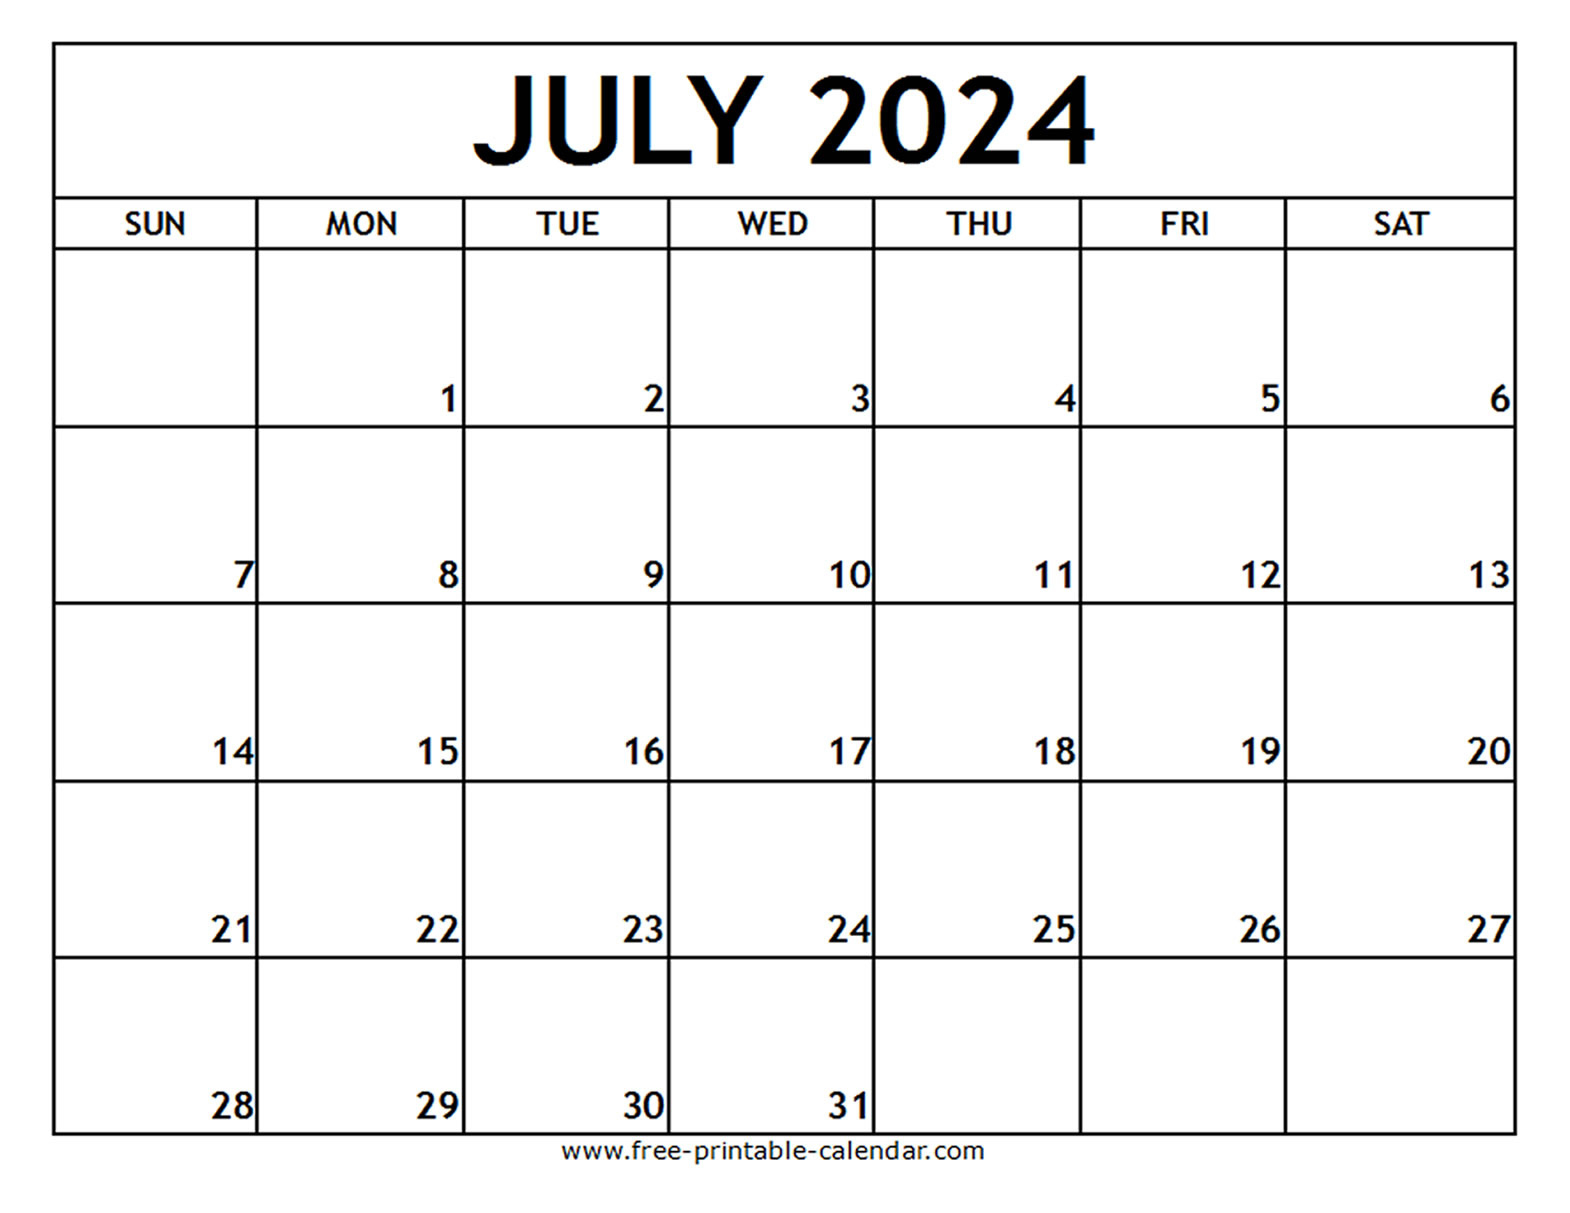 July 2024 Printable Calendar - Free-Printable-Calendar with regard to Free July 2024 Printable Calendar